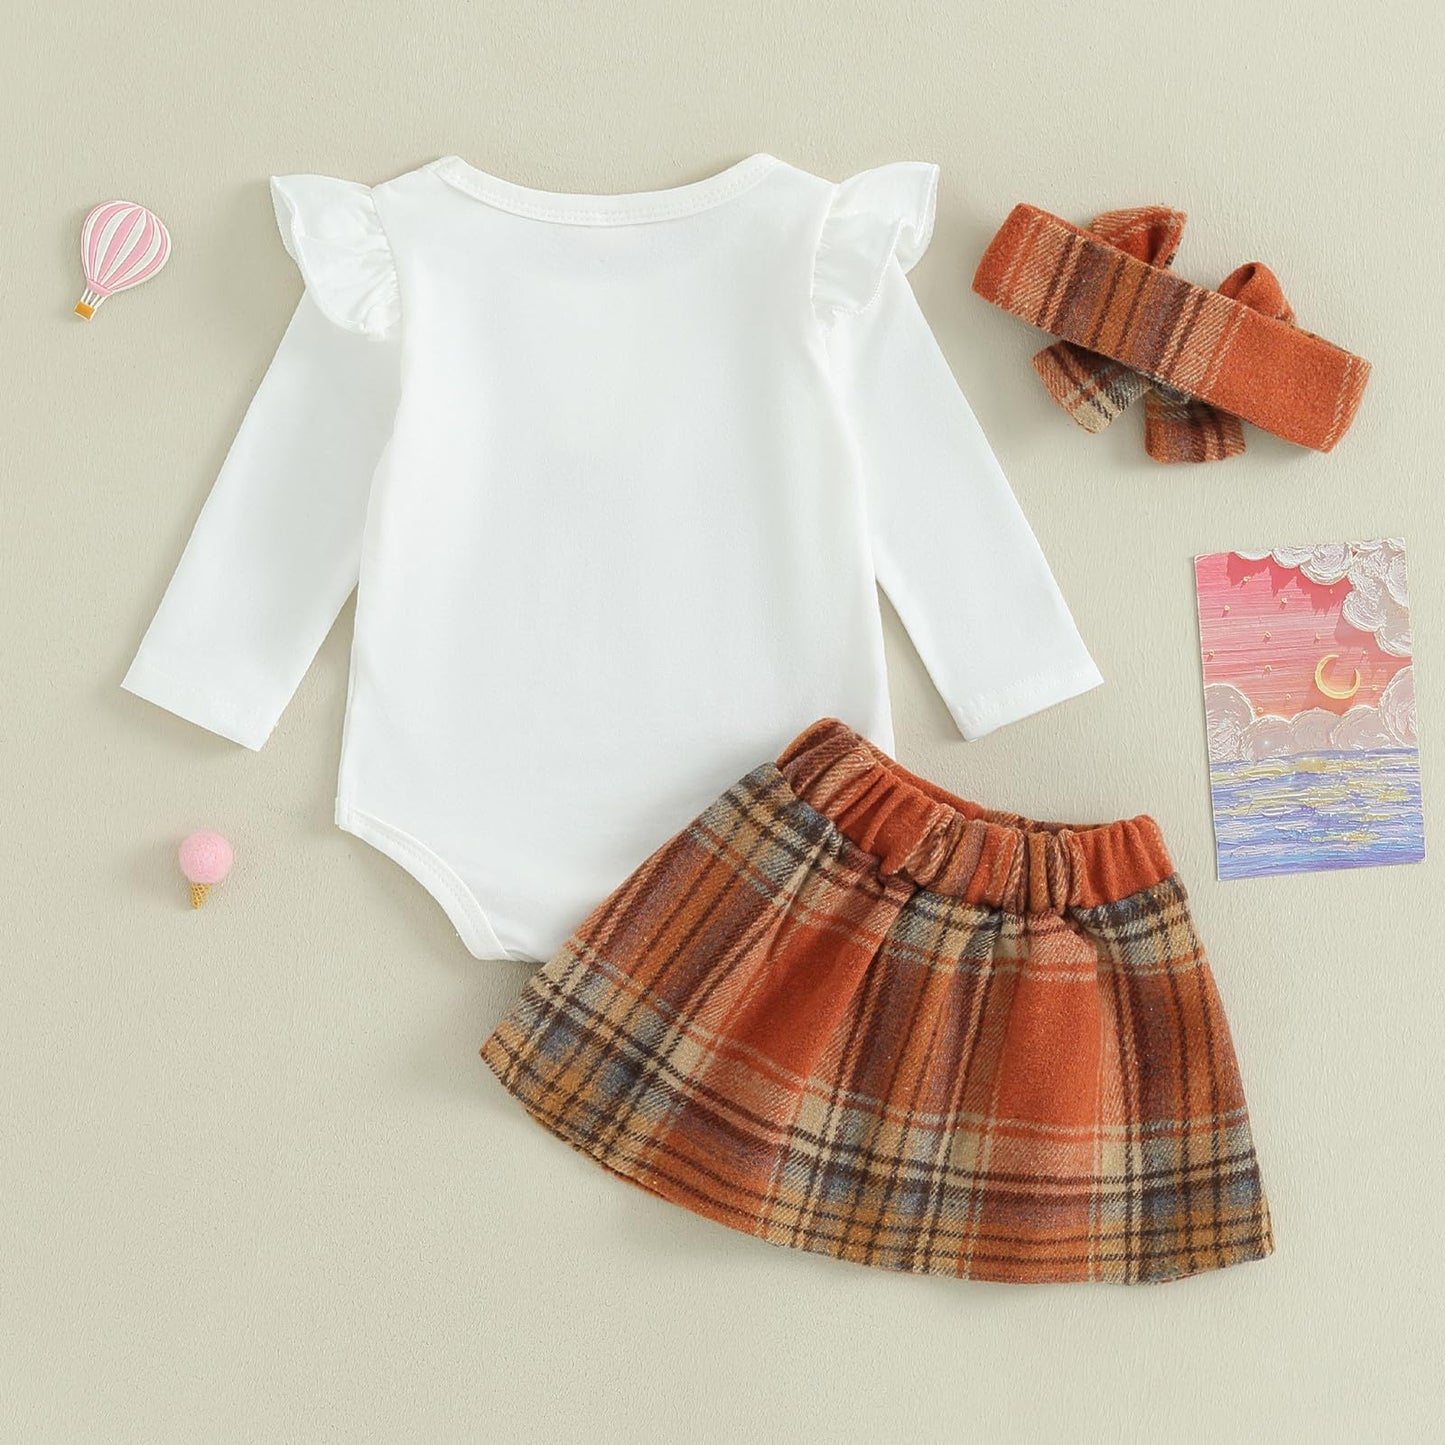 Kuriozud Newborn Baby Gir Fall Winter Outfit Long Sleeve Ruffe Romper Palid Bow Skirt Set Headband 3pcs Clothes for Toddler(3-6 M)